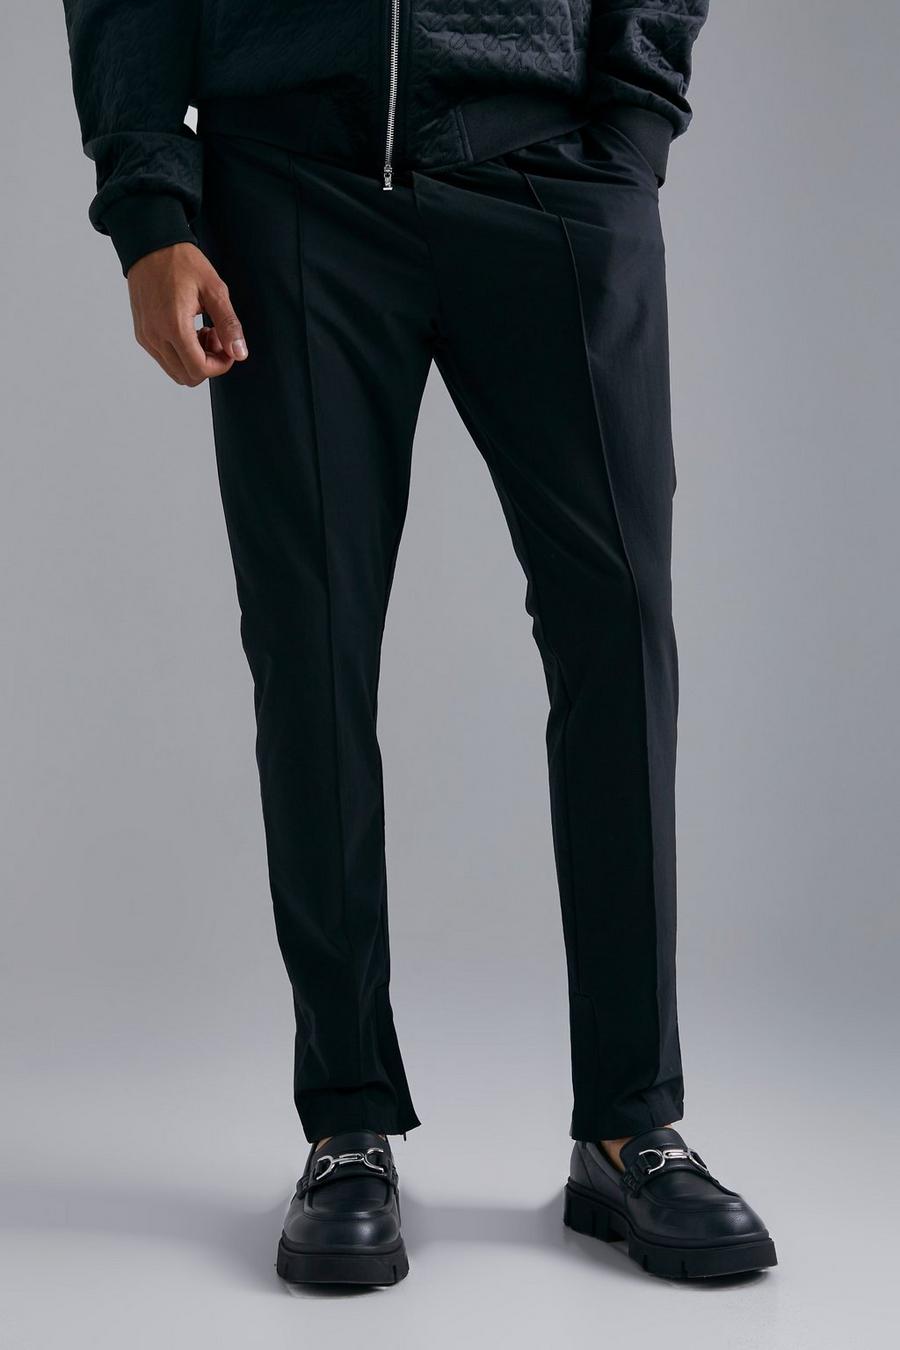 Black Tall Slim Fit 4 Way Stretch Pintuck Trouser